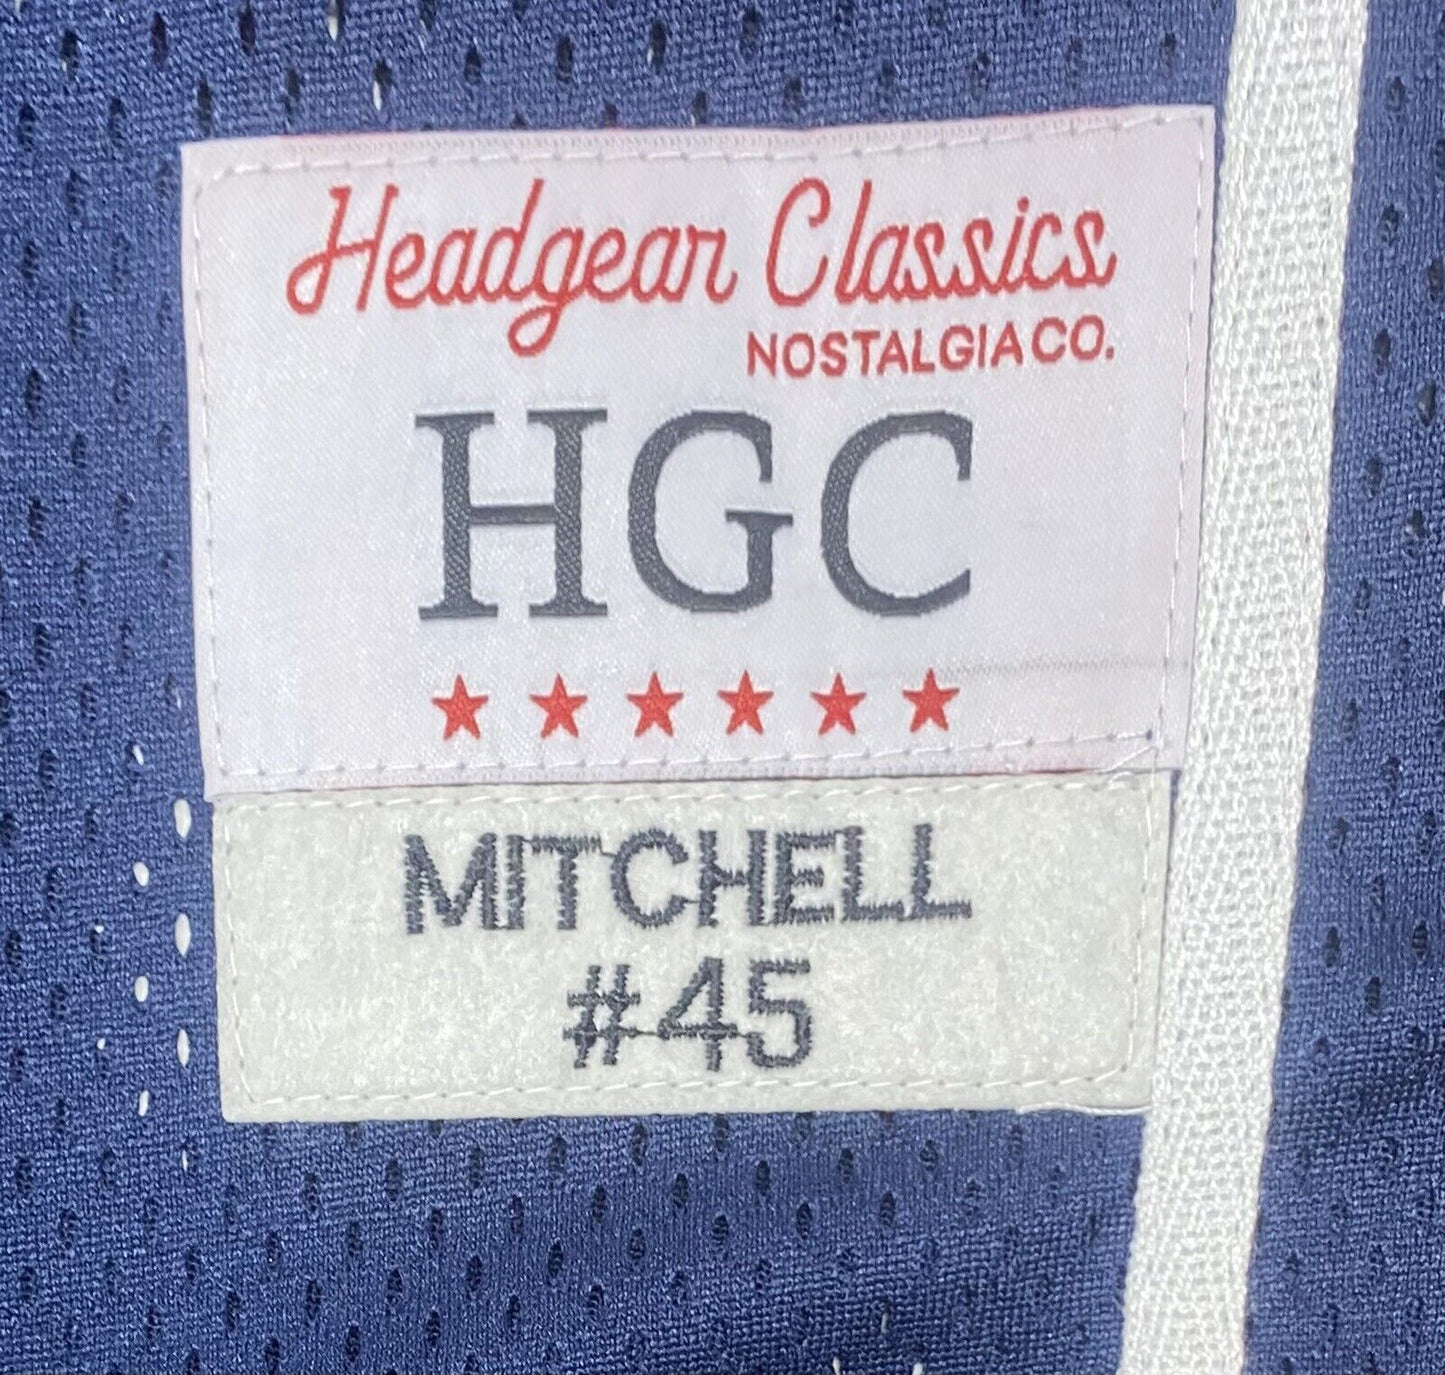 NEW Donovan Mitchell HS Throwback  Basketball Stitched Jersey Headgear Classics